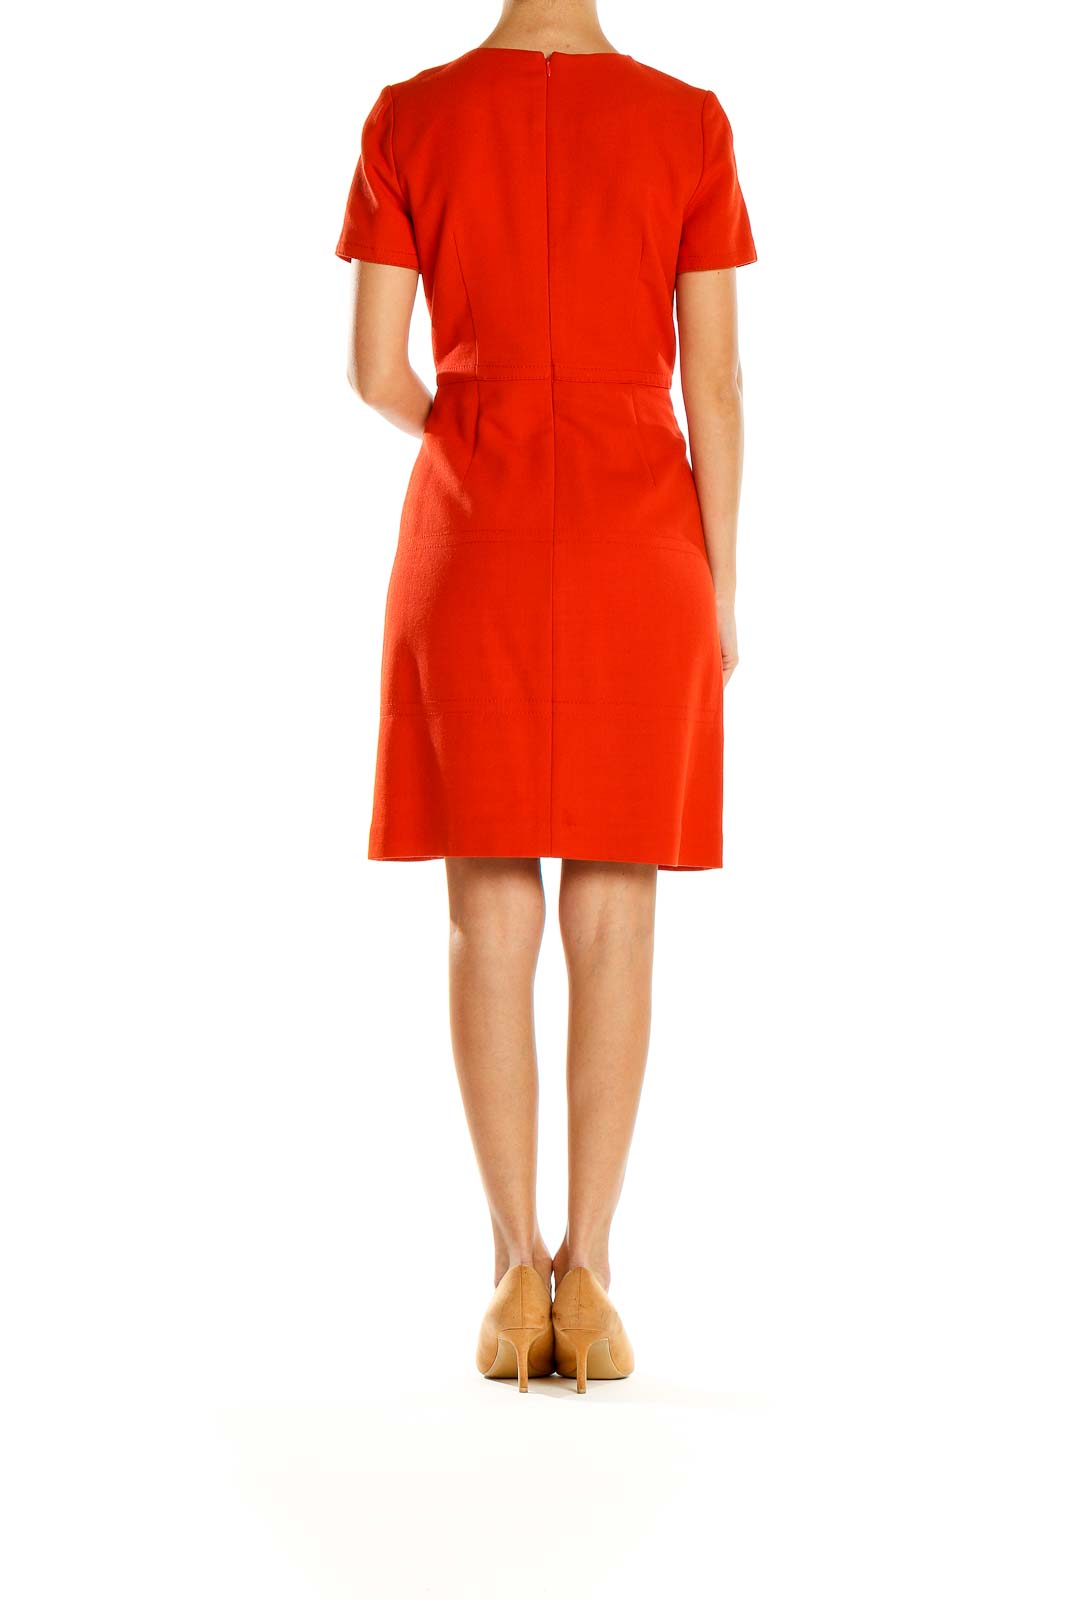 Banana Republic - Orange Sheath Dress Polyester Nylon Viscose Wool | SilkRoll